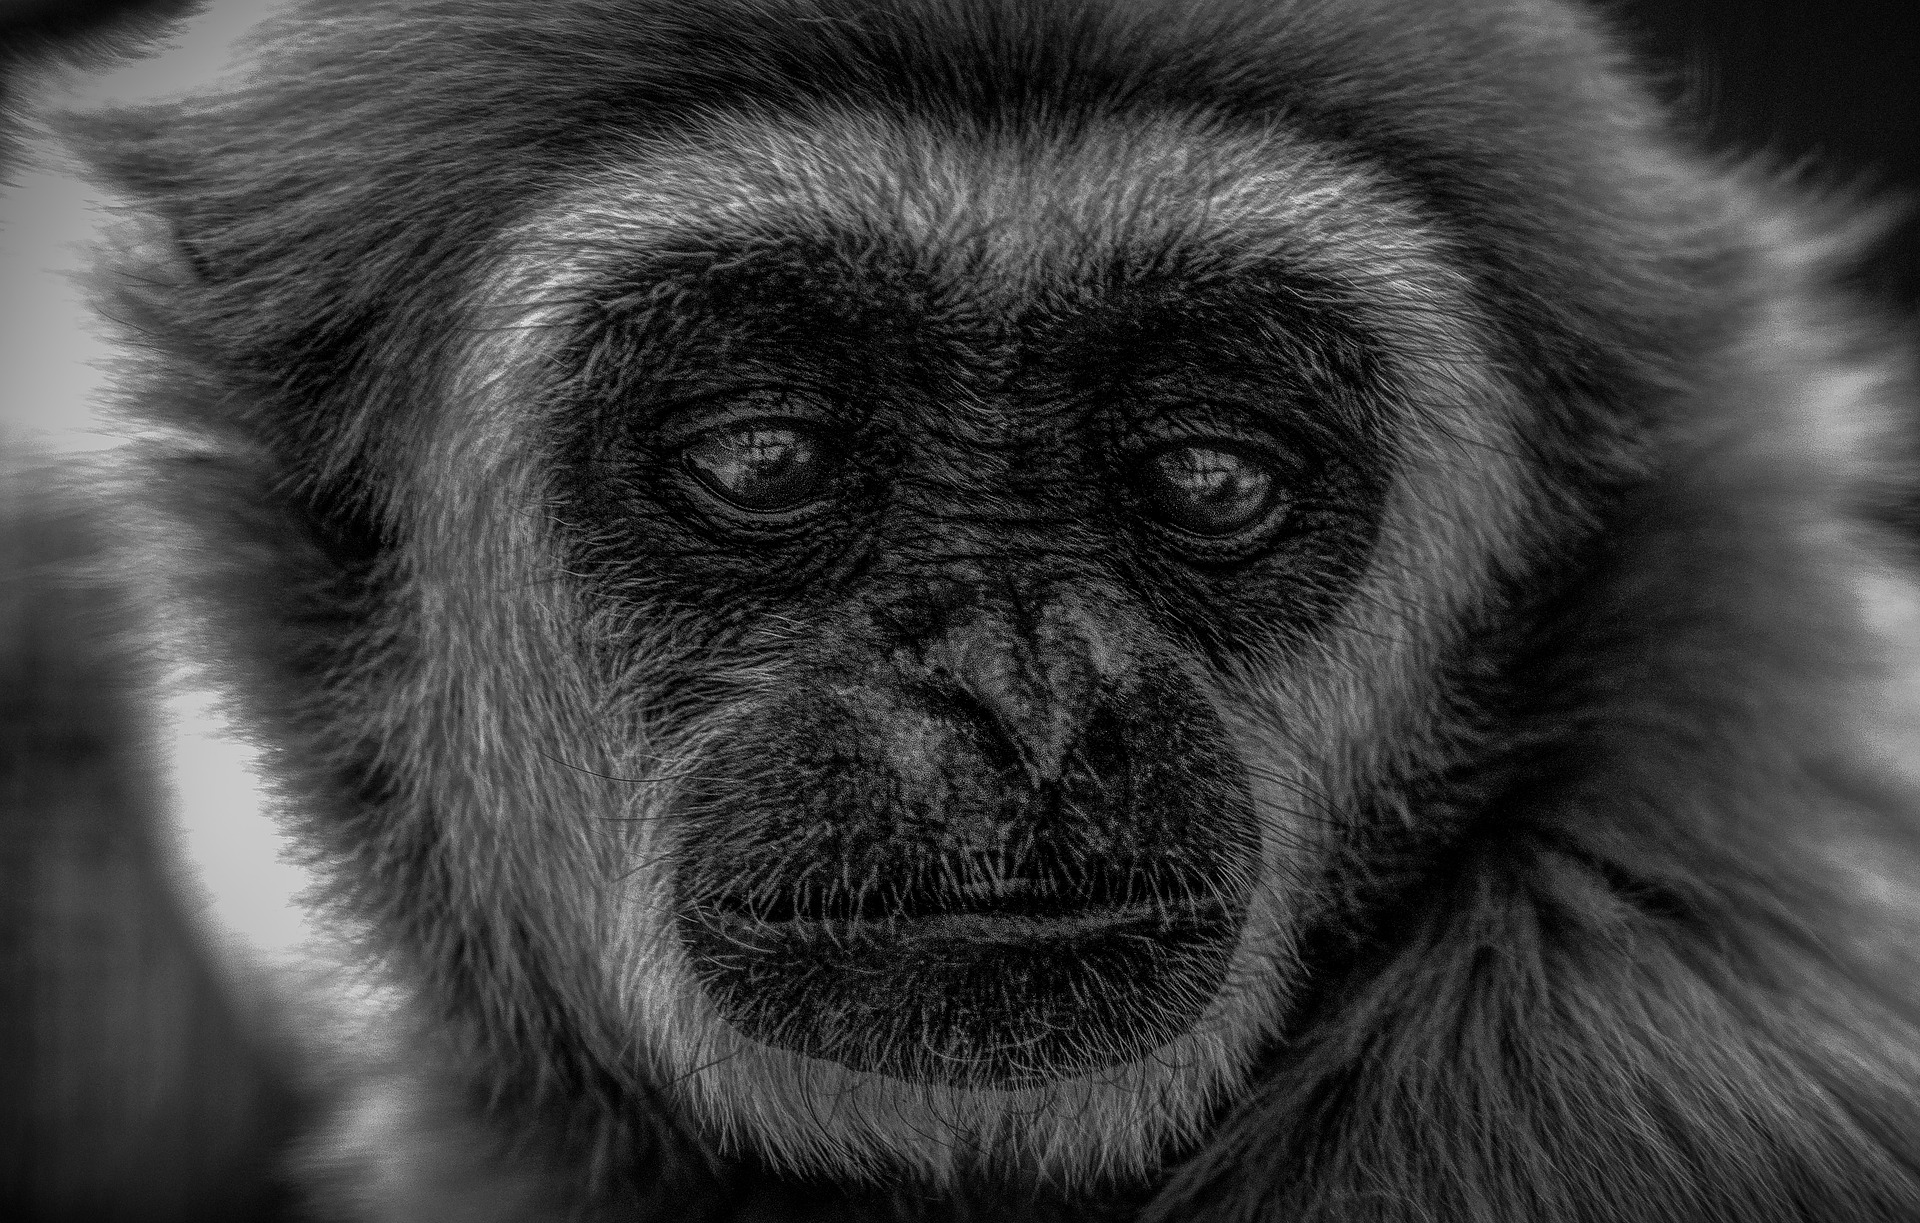 Kalimantan Orangutan Explorer by Houseboat | Gibbon, Indonesia